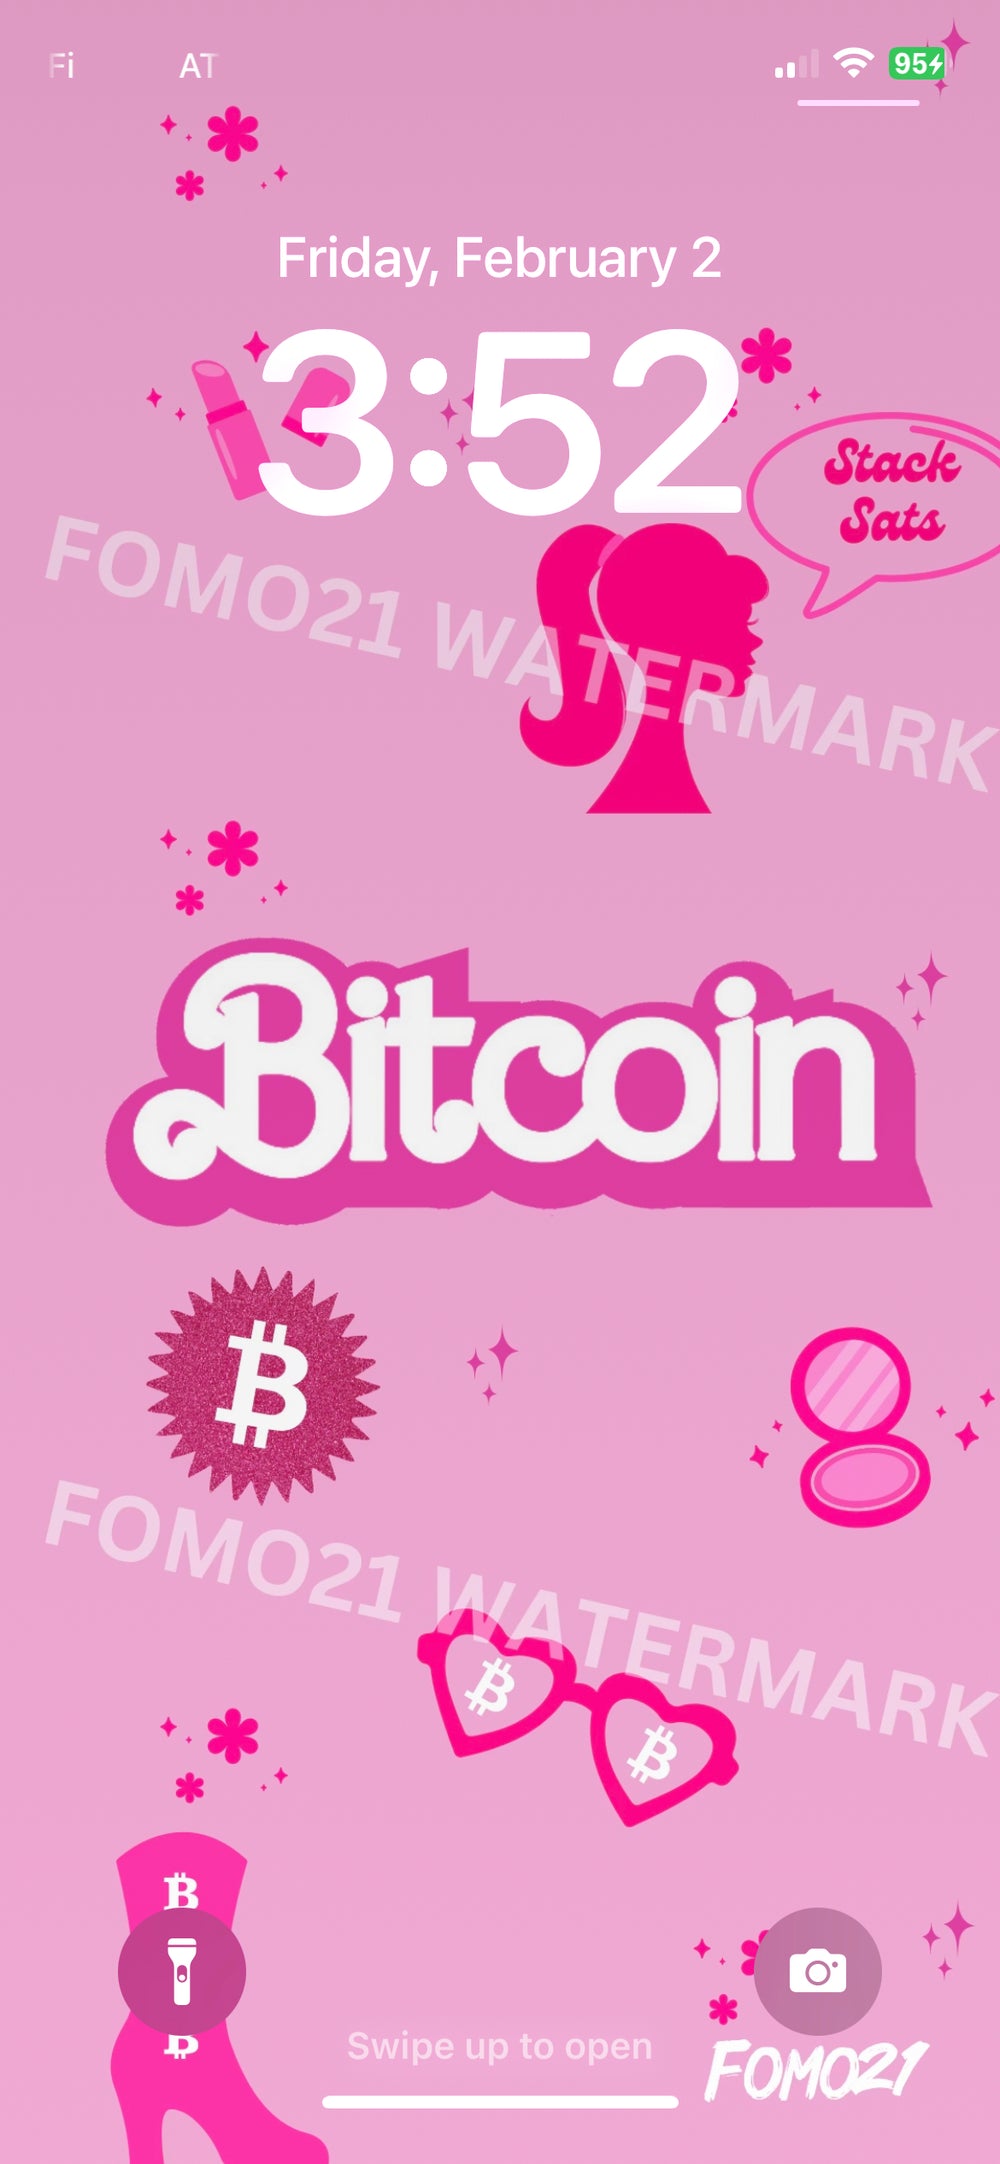 Life's Fantastic Bitcoin iPhone Wallpaper - fomo21